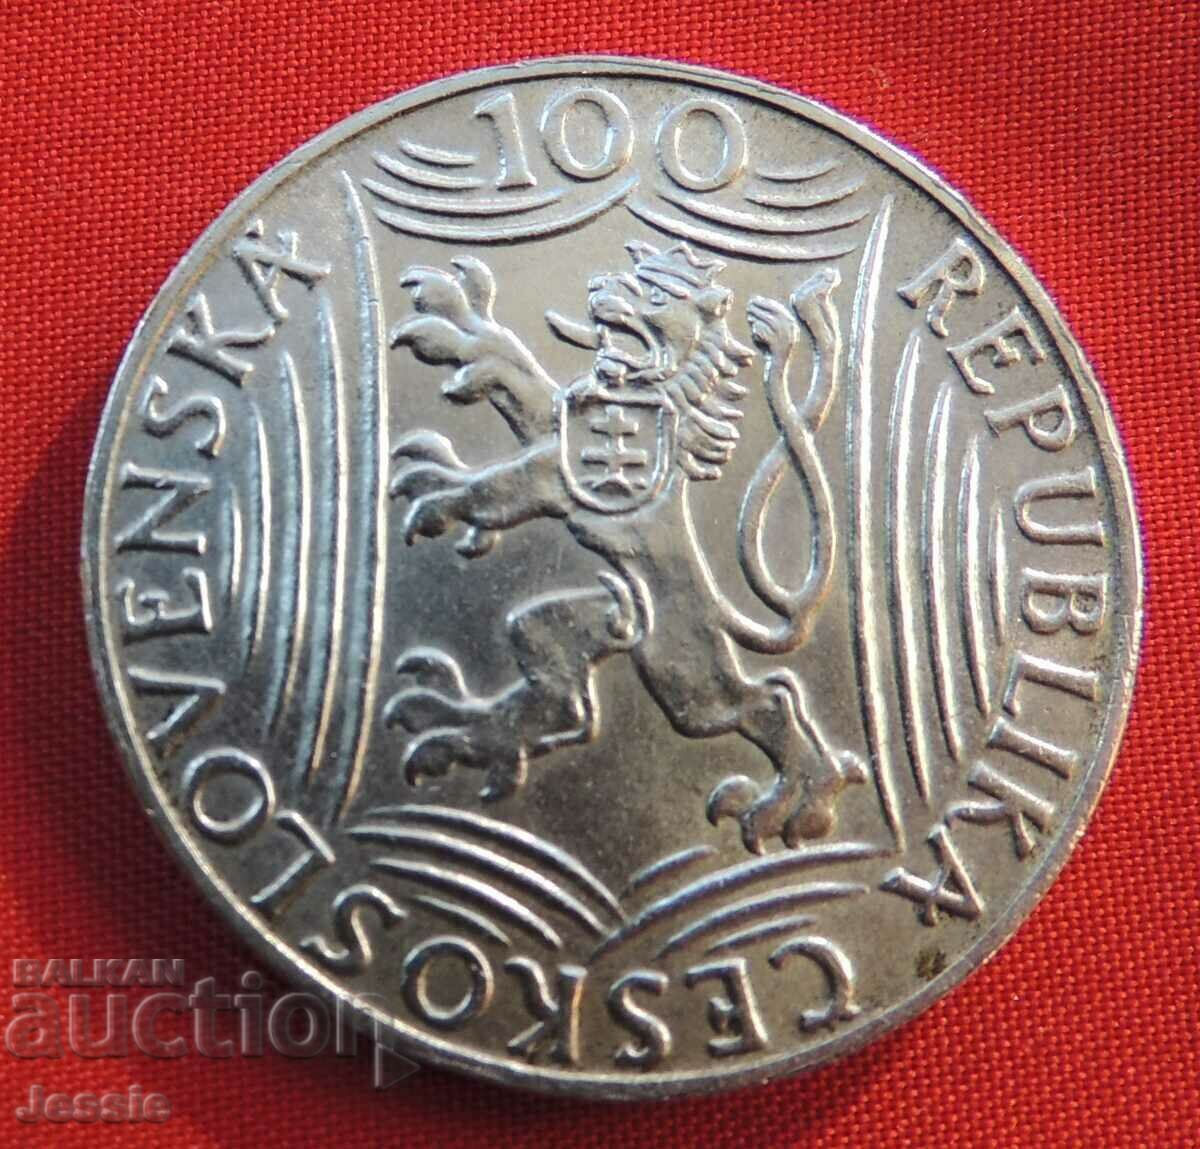 100 kroner 1949 Czechoslovakia Stalin